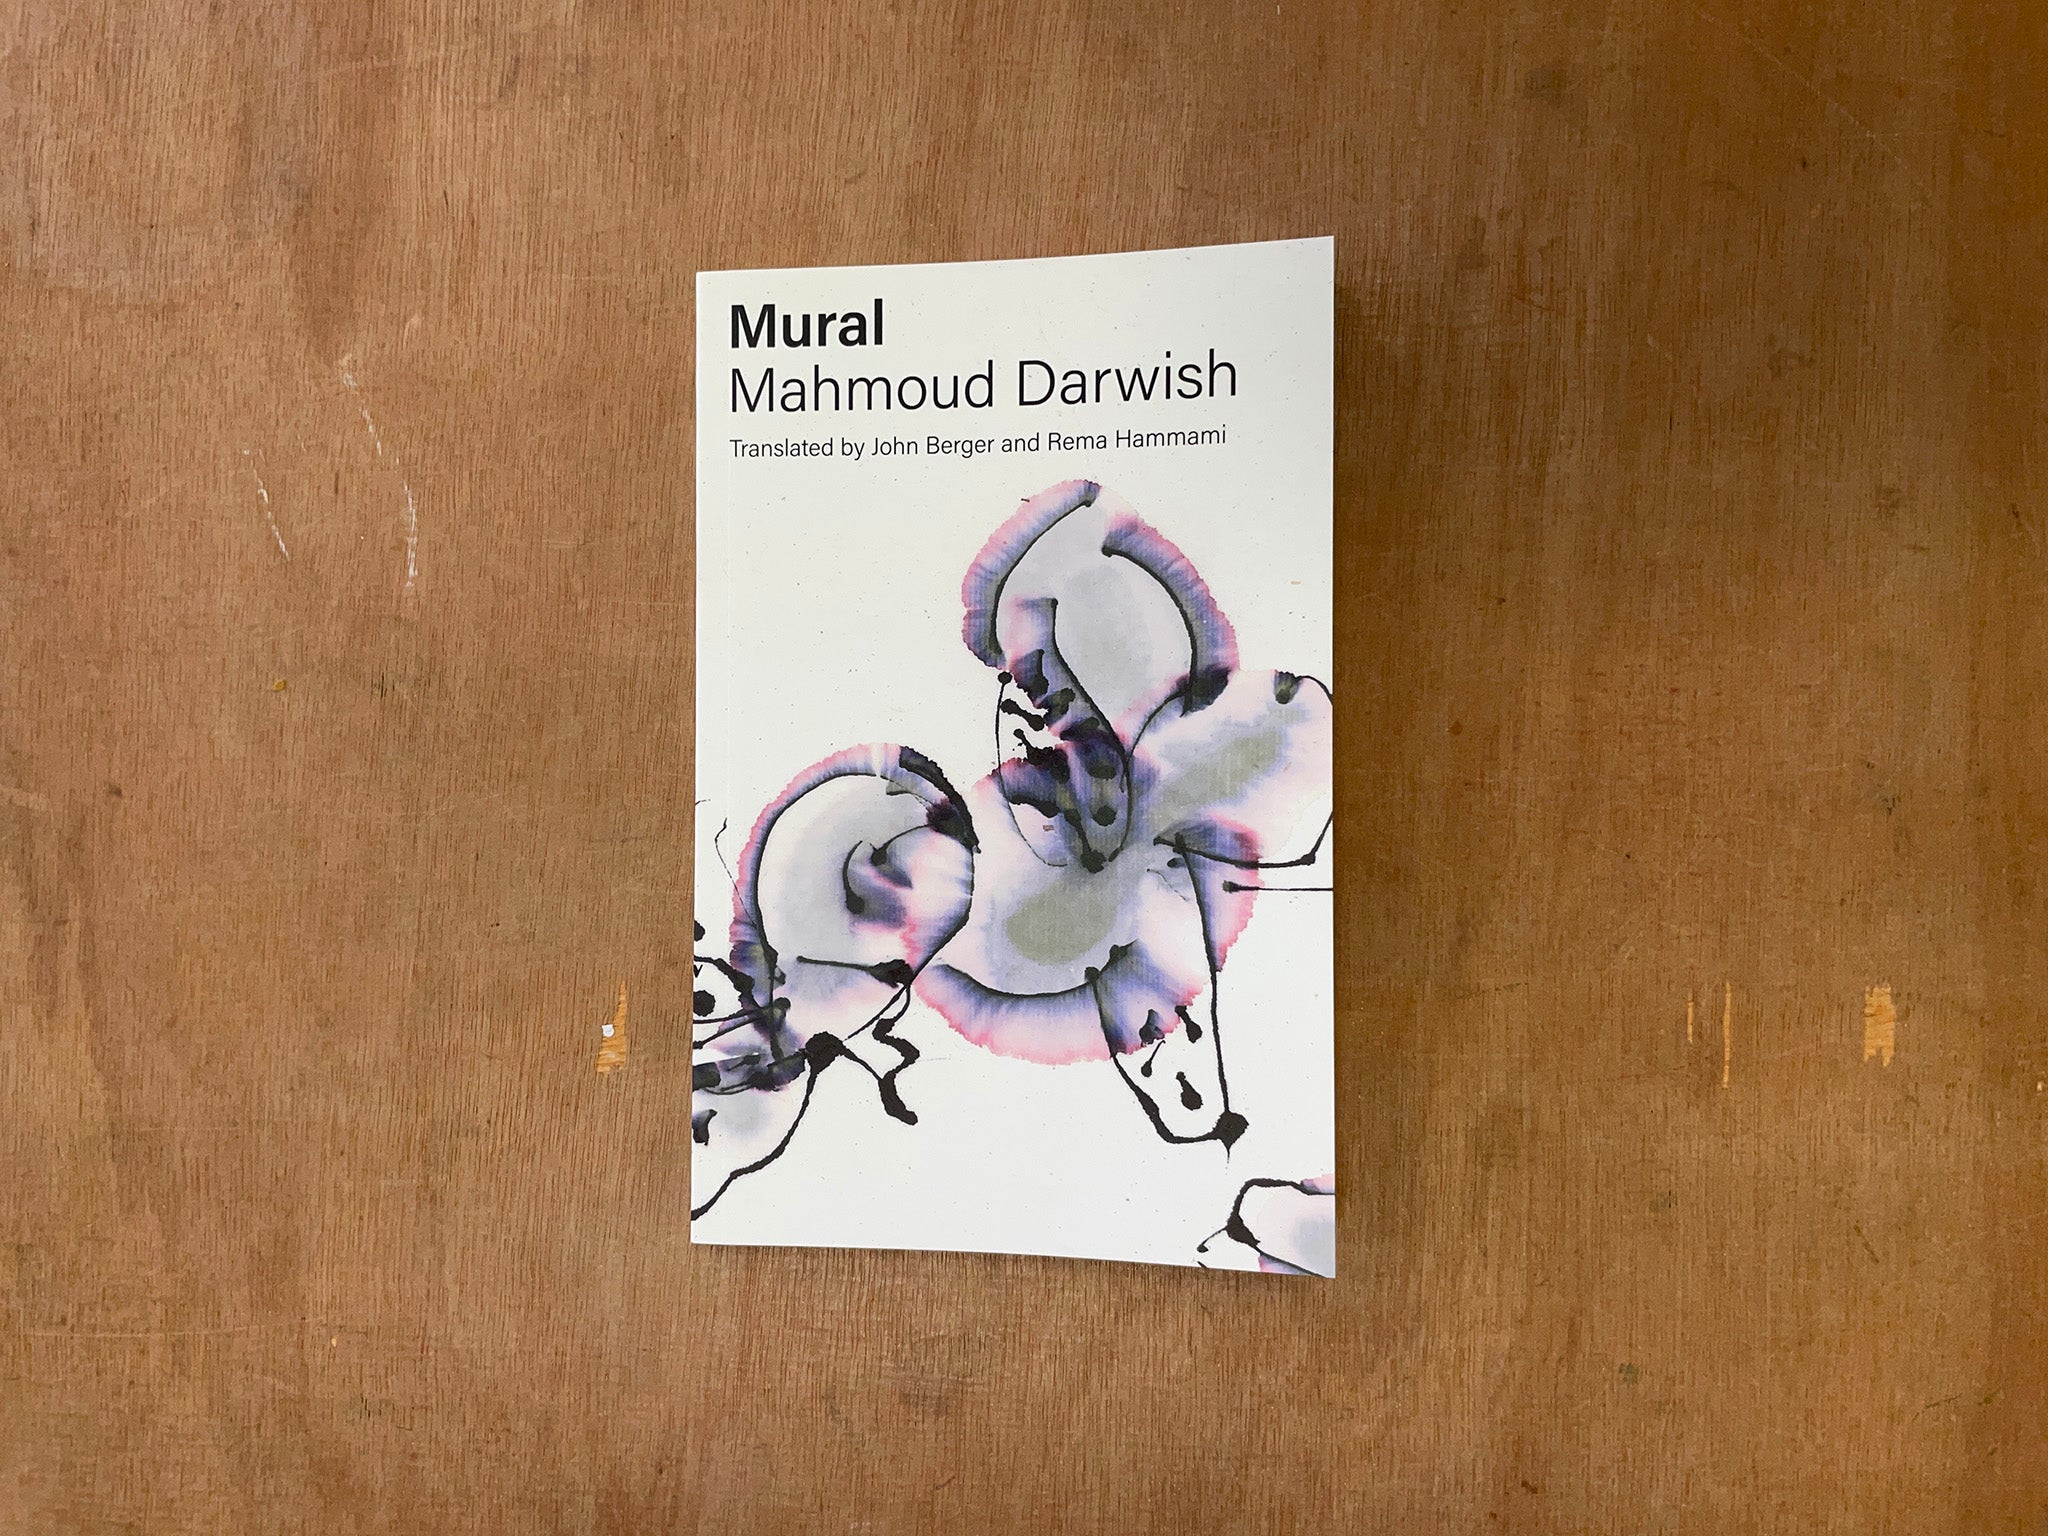 MURAL by Mahmoud Darwish